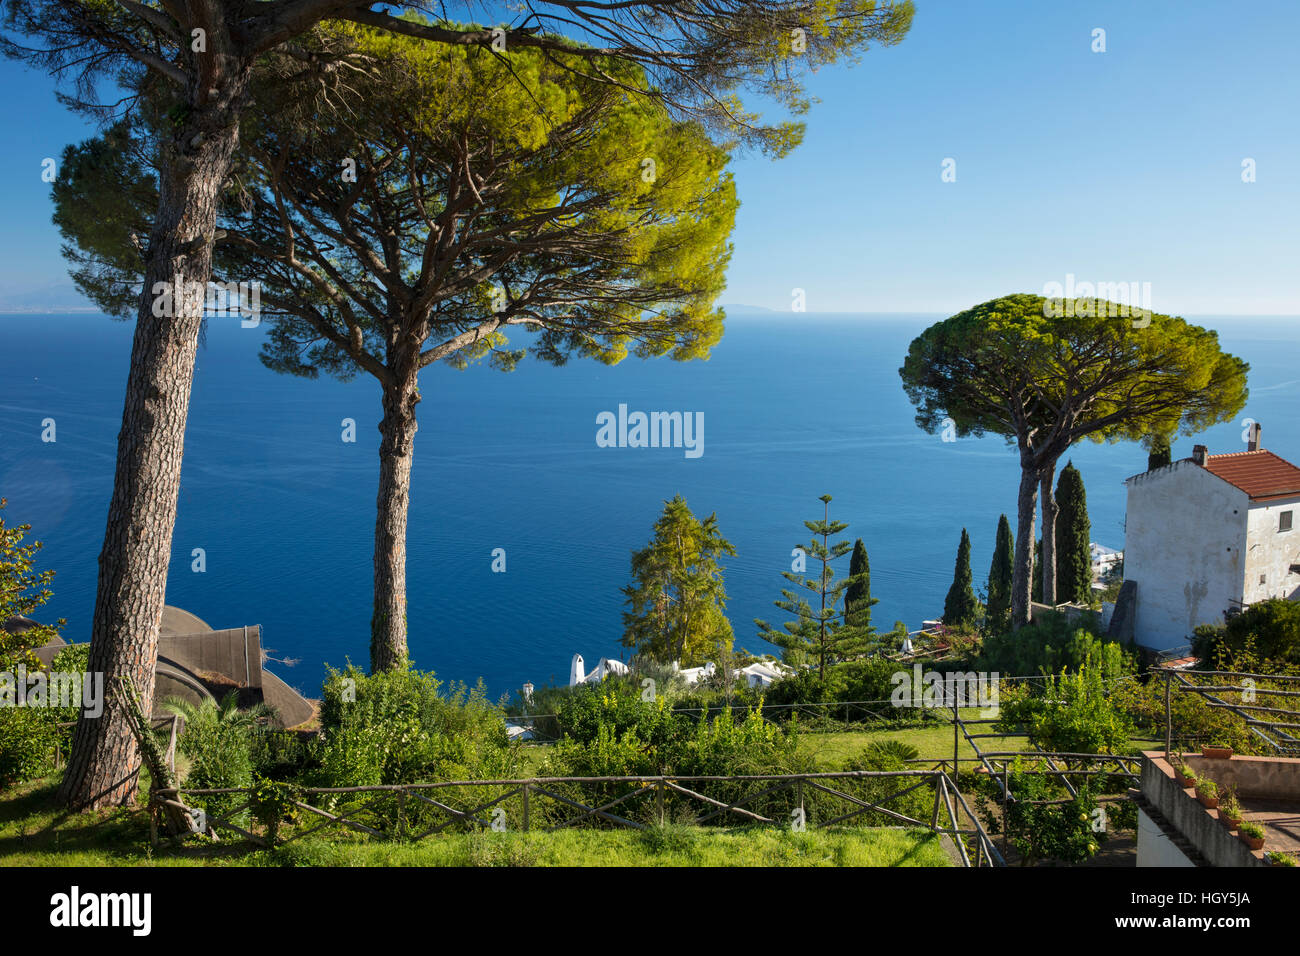 Garden of Villa Rufolo over looking the Amalfi Coast and the Gulf of Salerno, Ravello, Campania, Italy Stock Photo